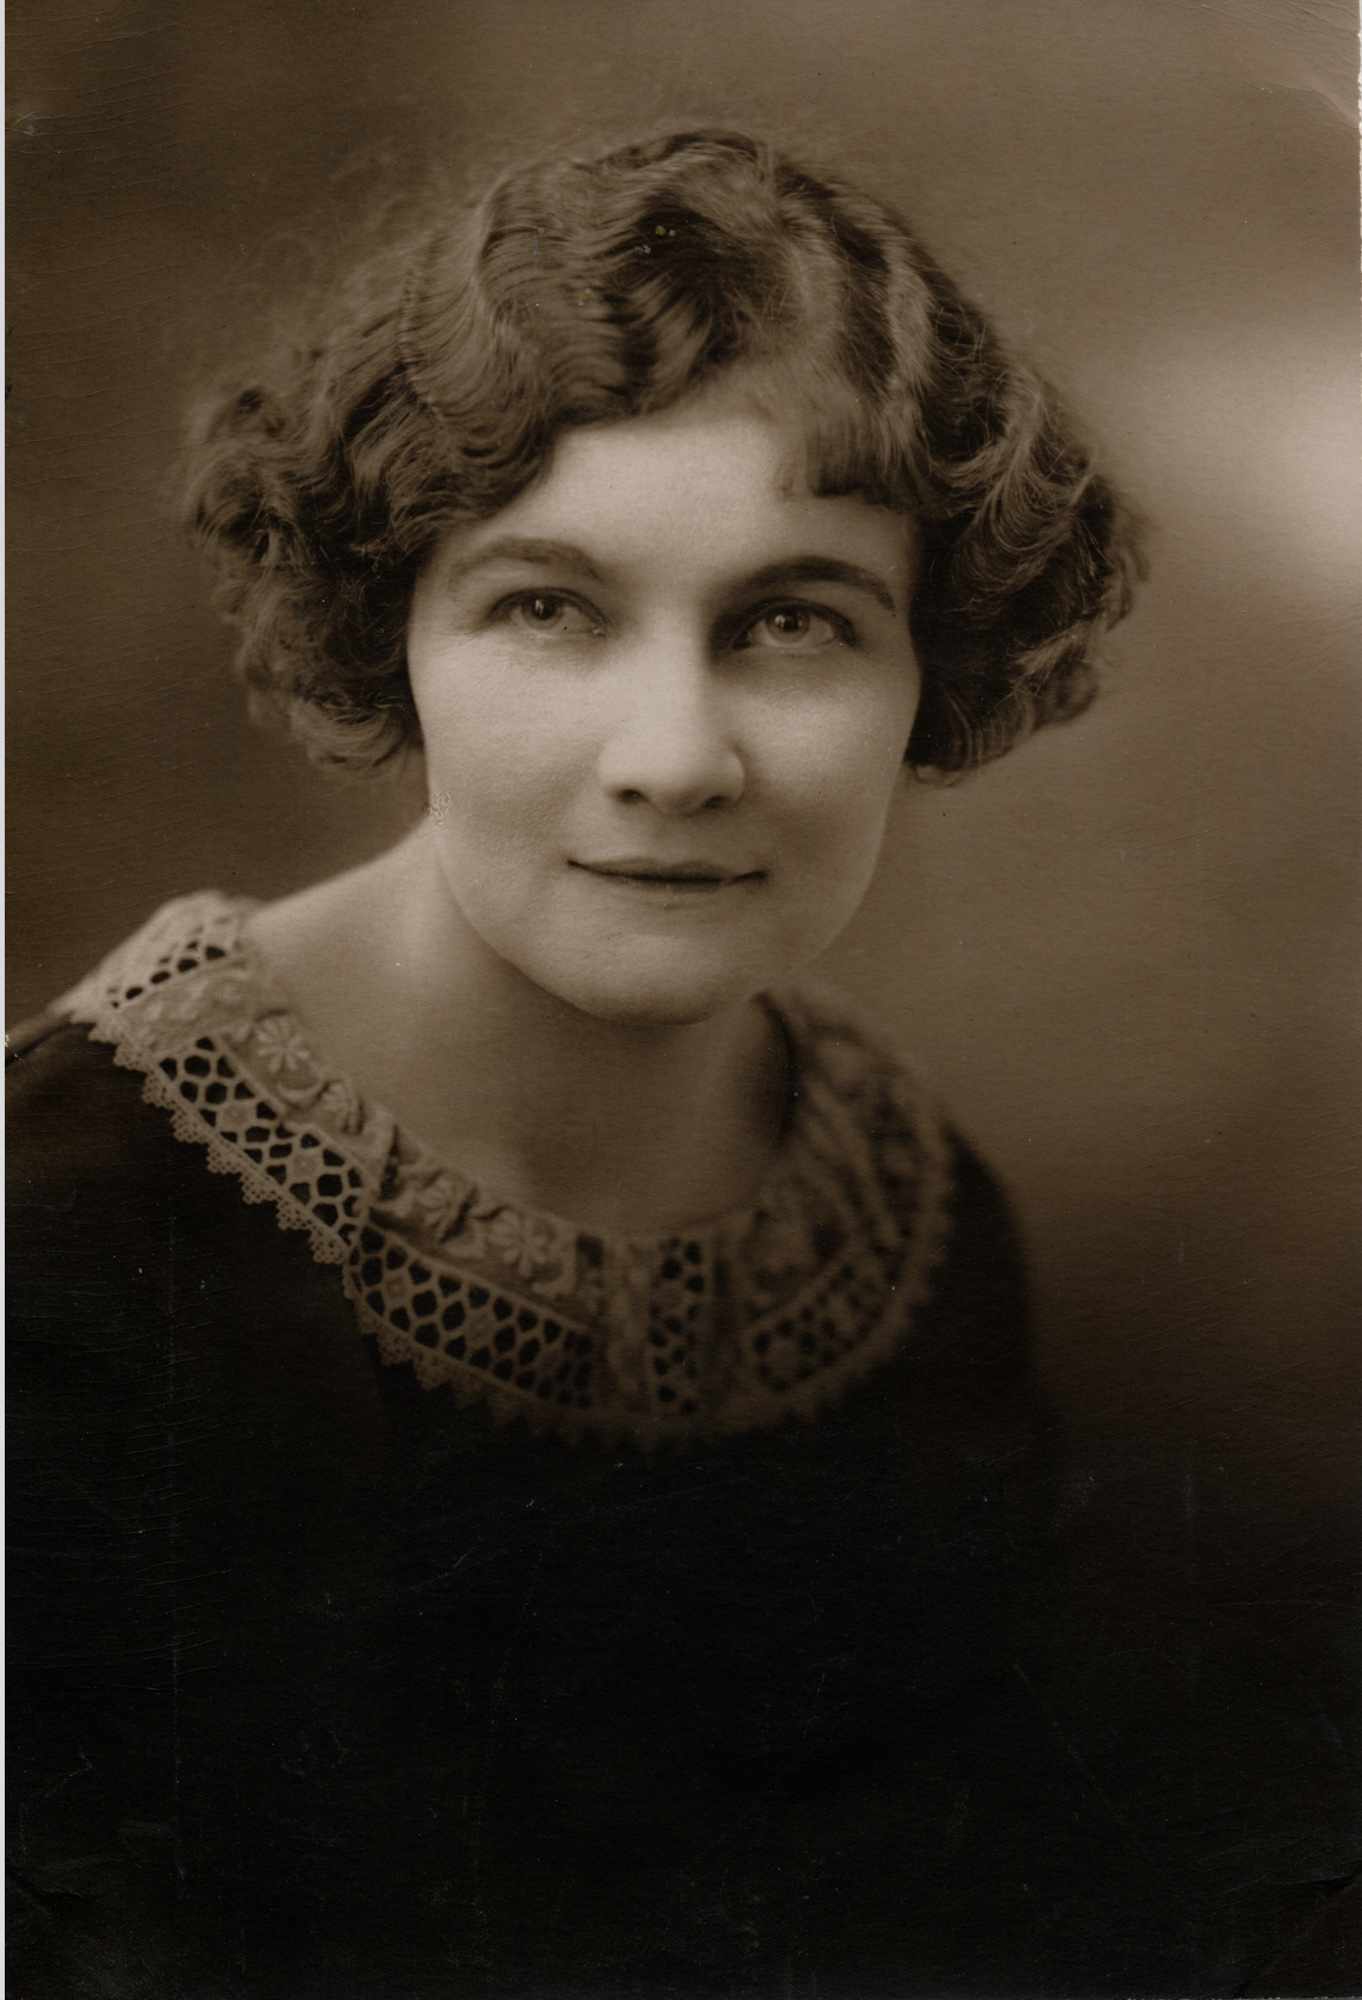 Dauth Family Archive - Circa 1920s - Elsie Dauth Portrait - Facing Camera